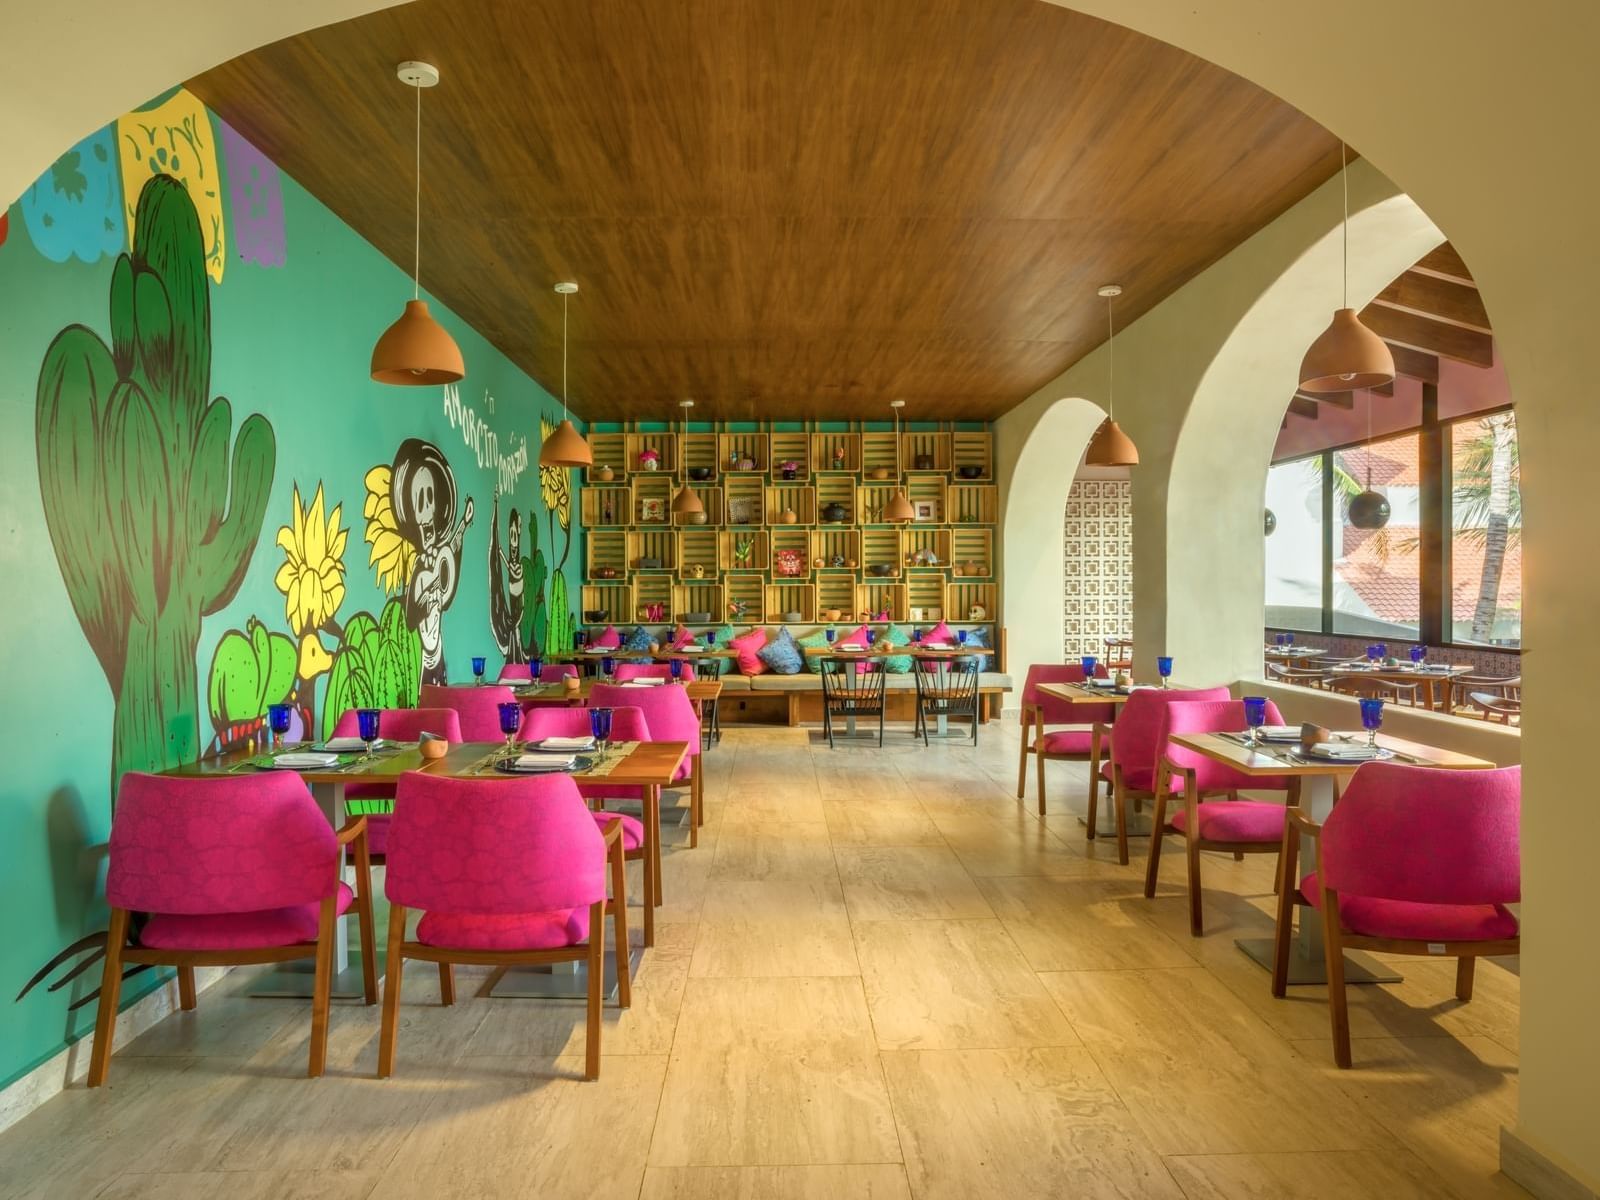 EI Mexicano colorful dining area with wall art at La Colección